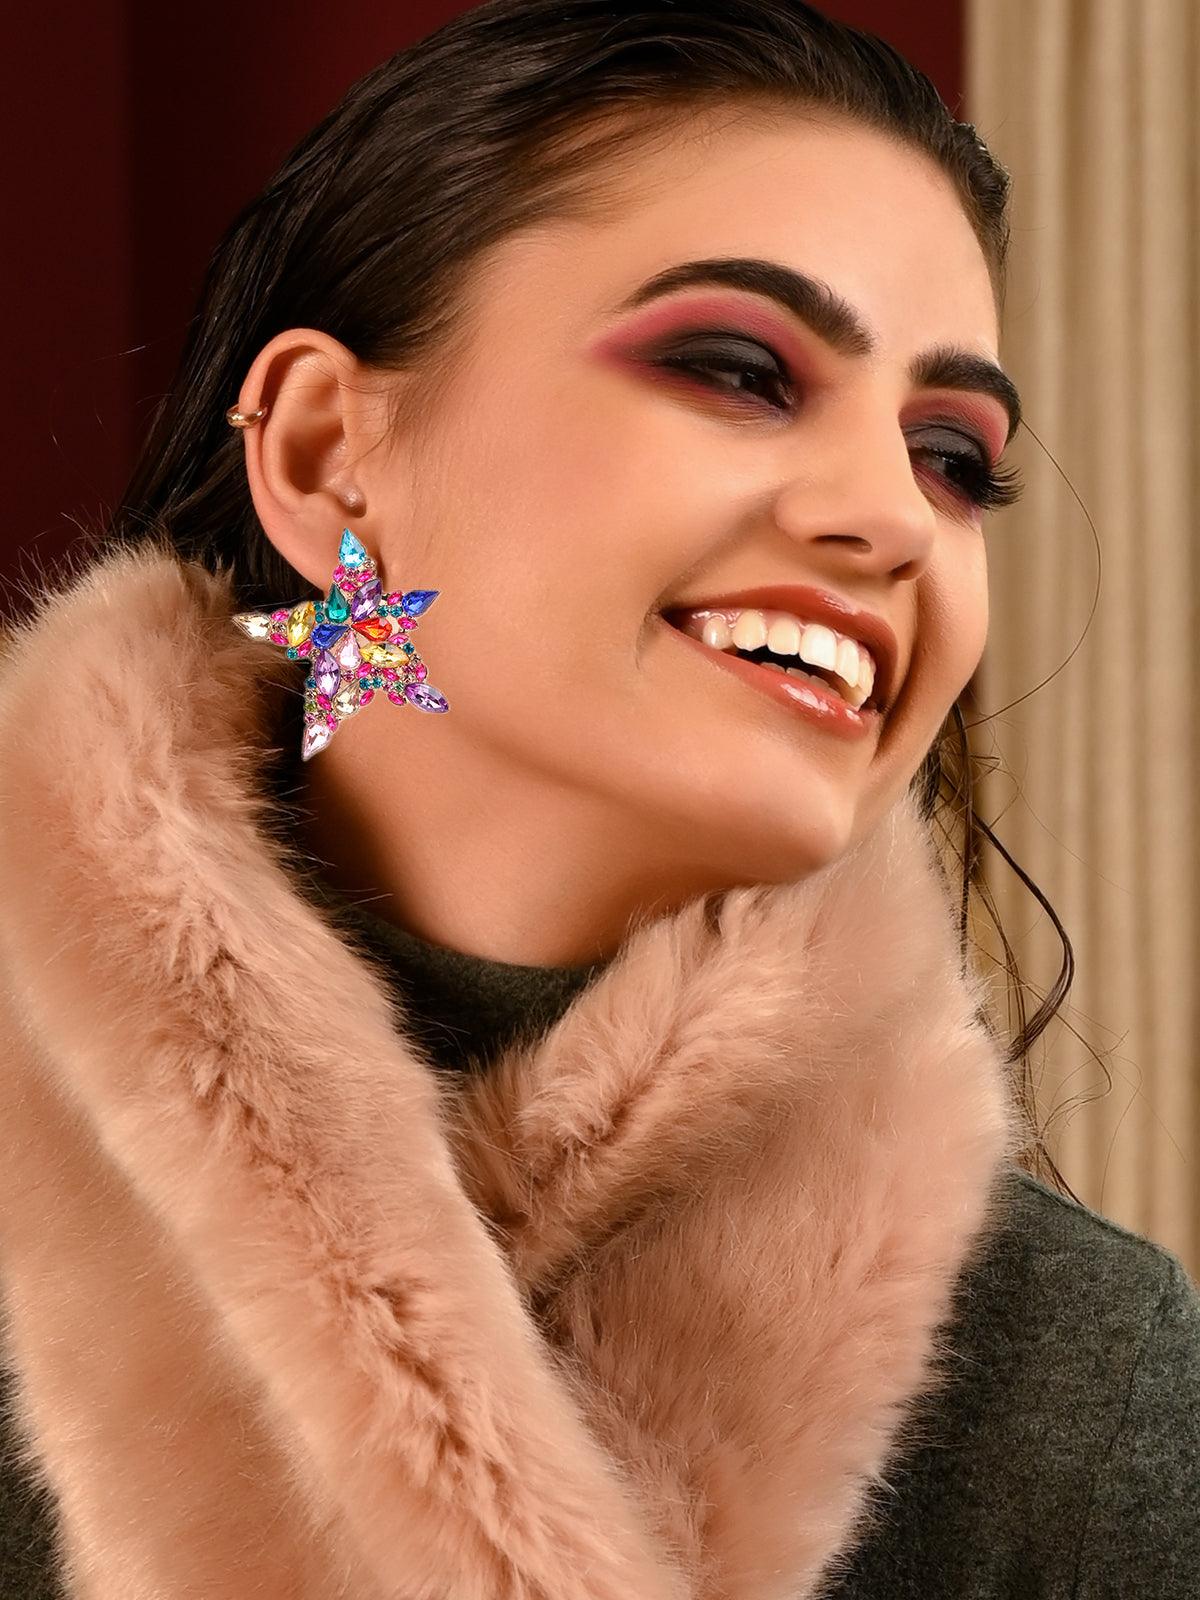 Multicoloured gemstone embellished star shaped earrings - Odette